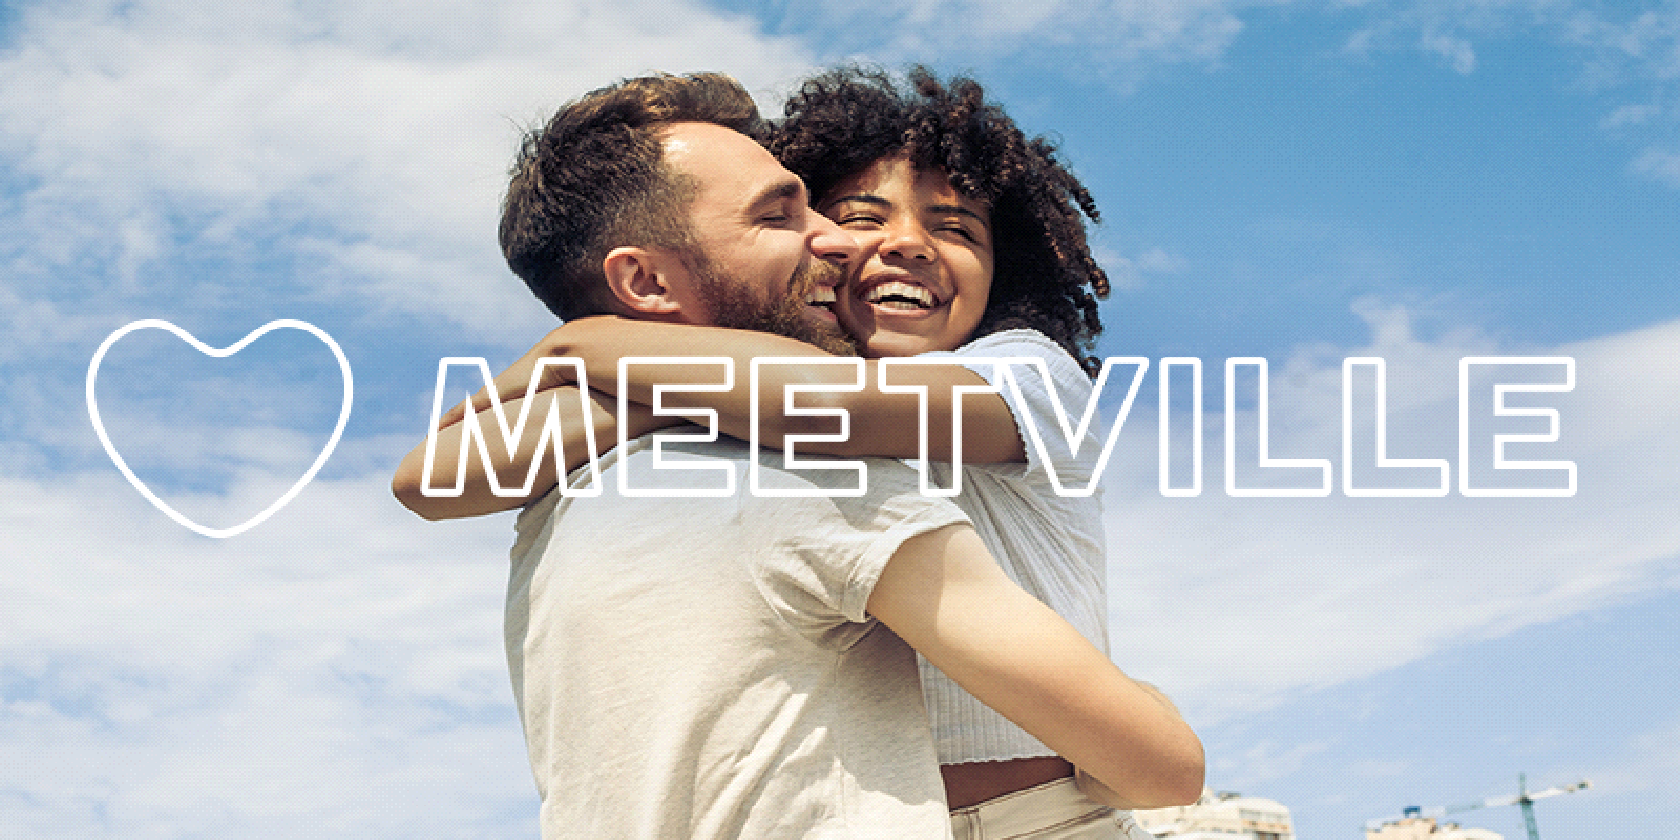 Meetville is a Popular Dating Platform Where Singles Ca…